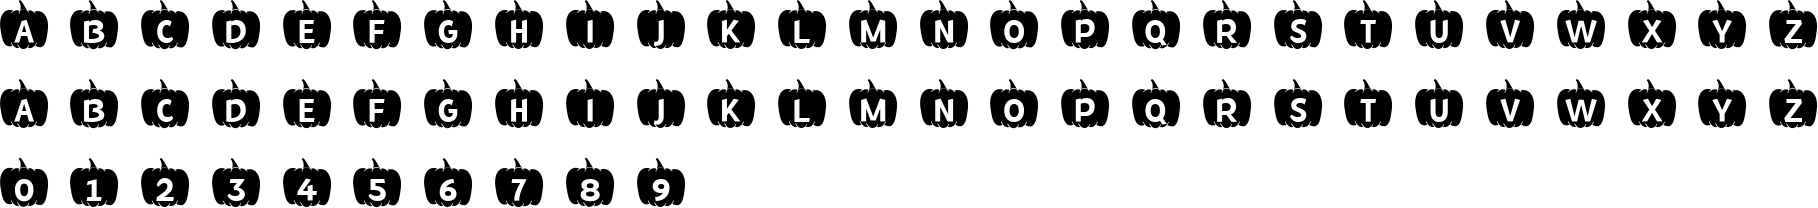 Mf Fall Pumpkins Character Map